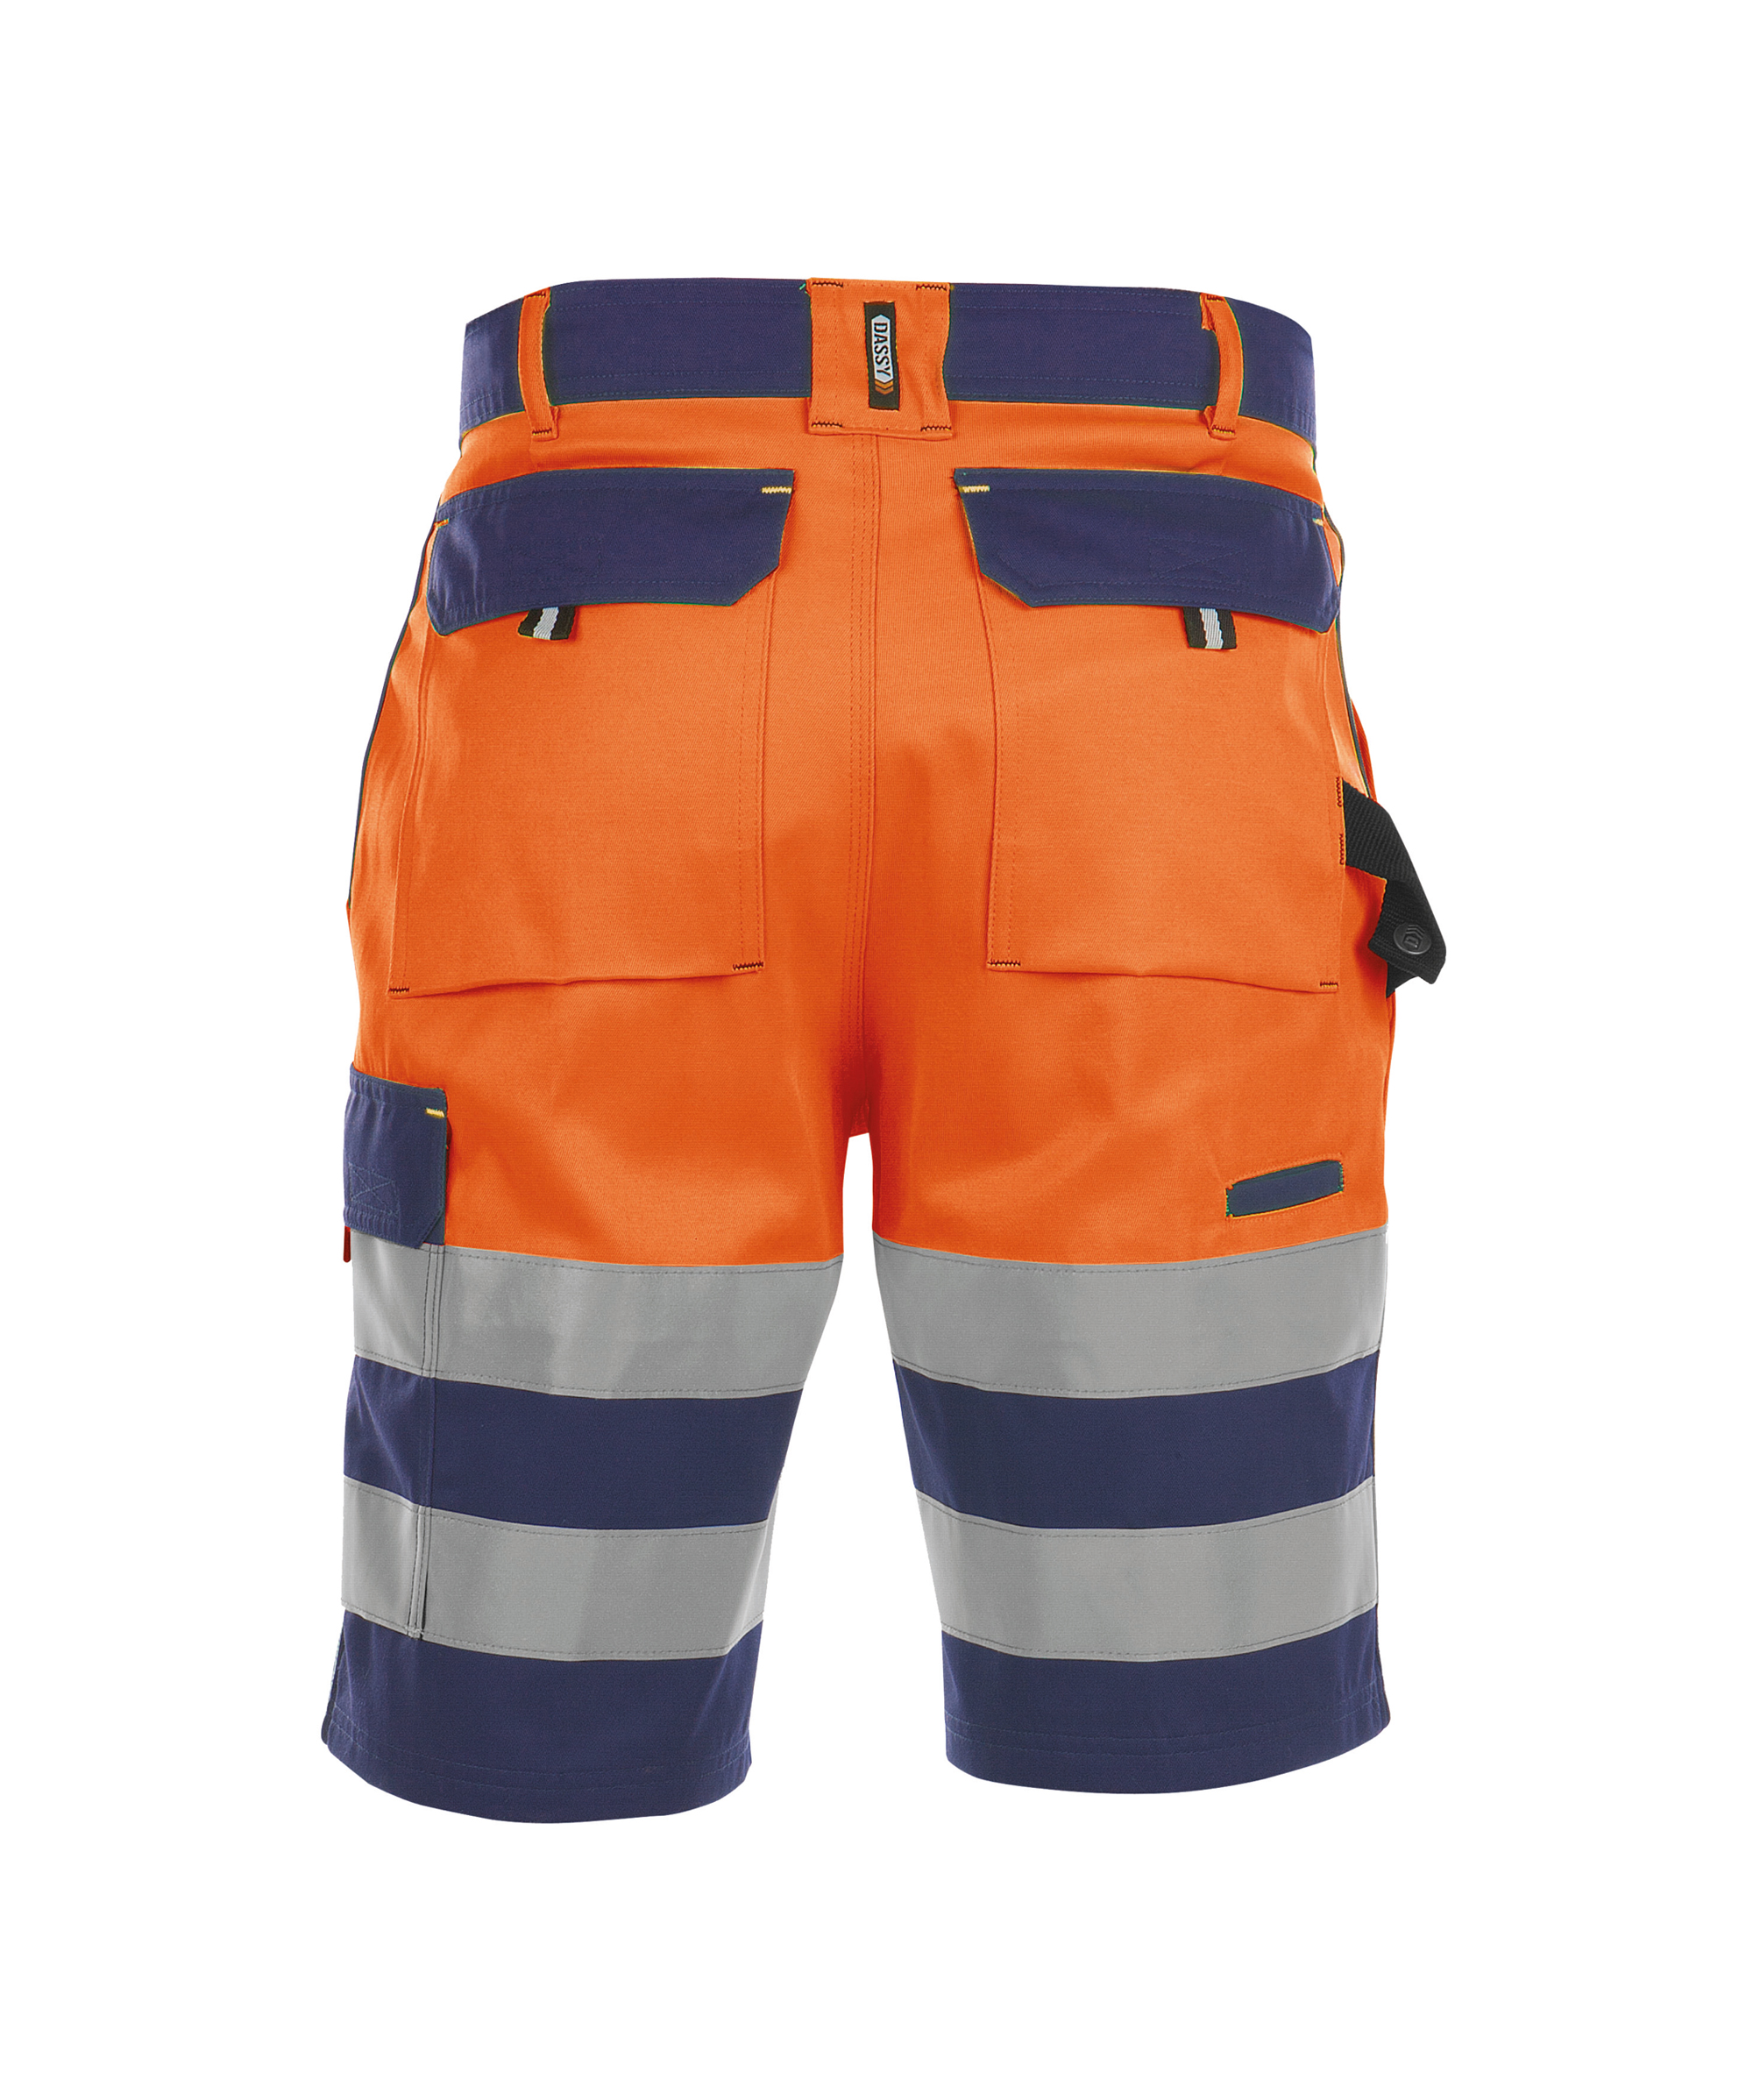 venna_high-visibility-work-shorts_navy-fluo-orange_back.jpg